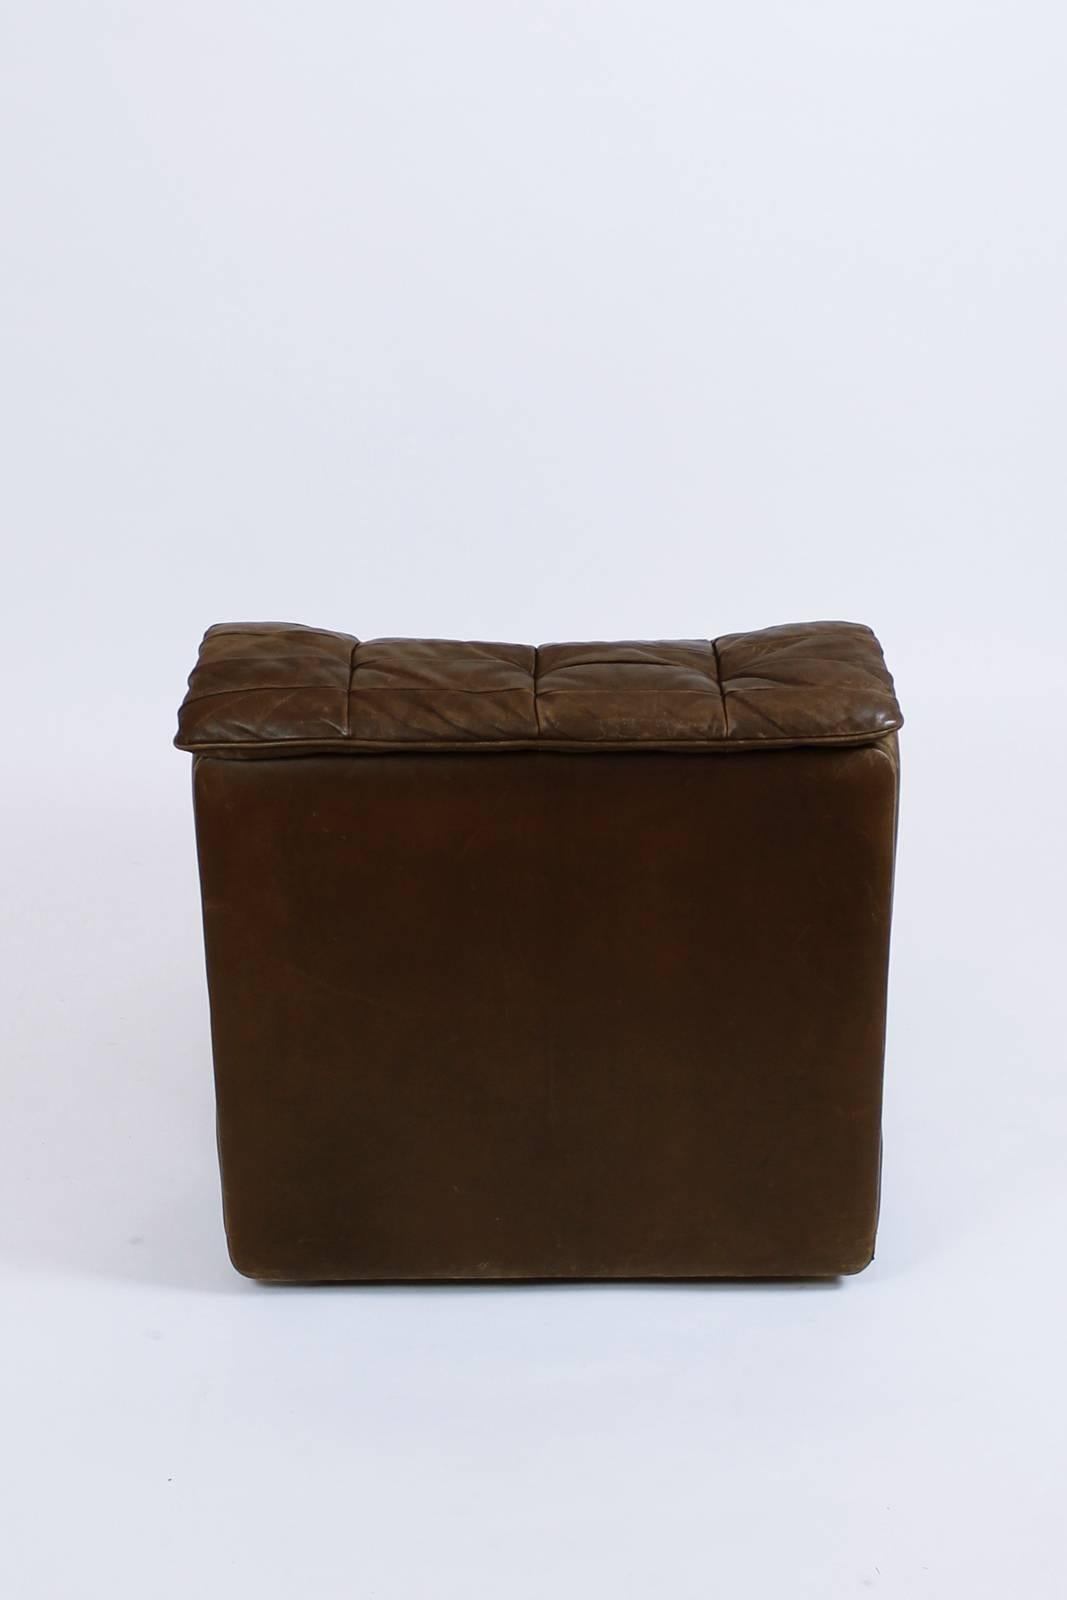 De Sede Model DS-11 Tufted Dark brown Leather Modular Sofa, Switzerland ...